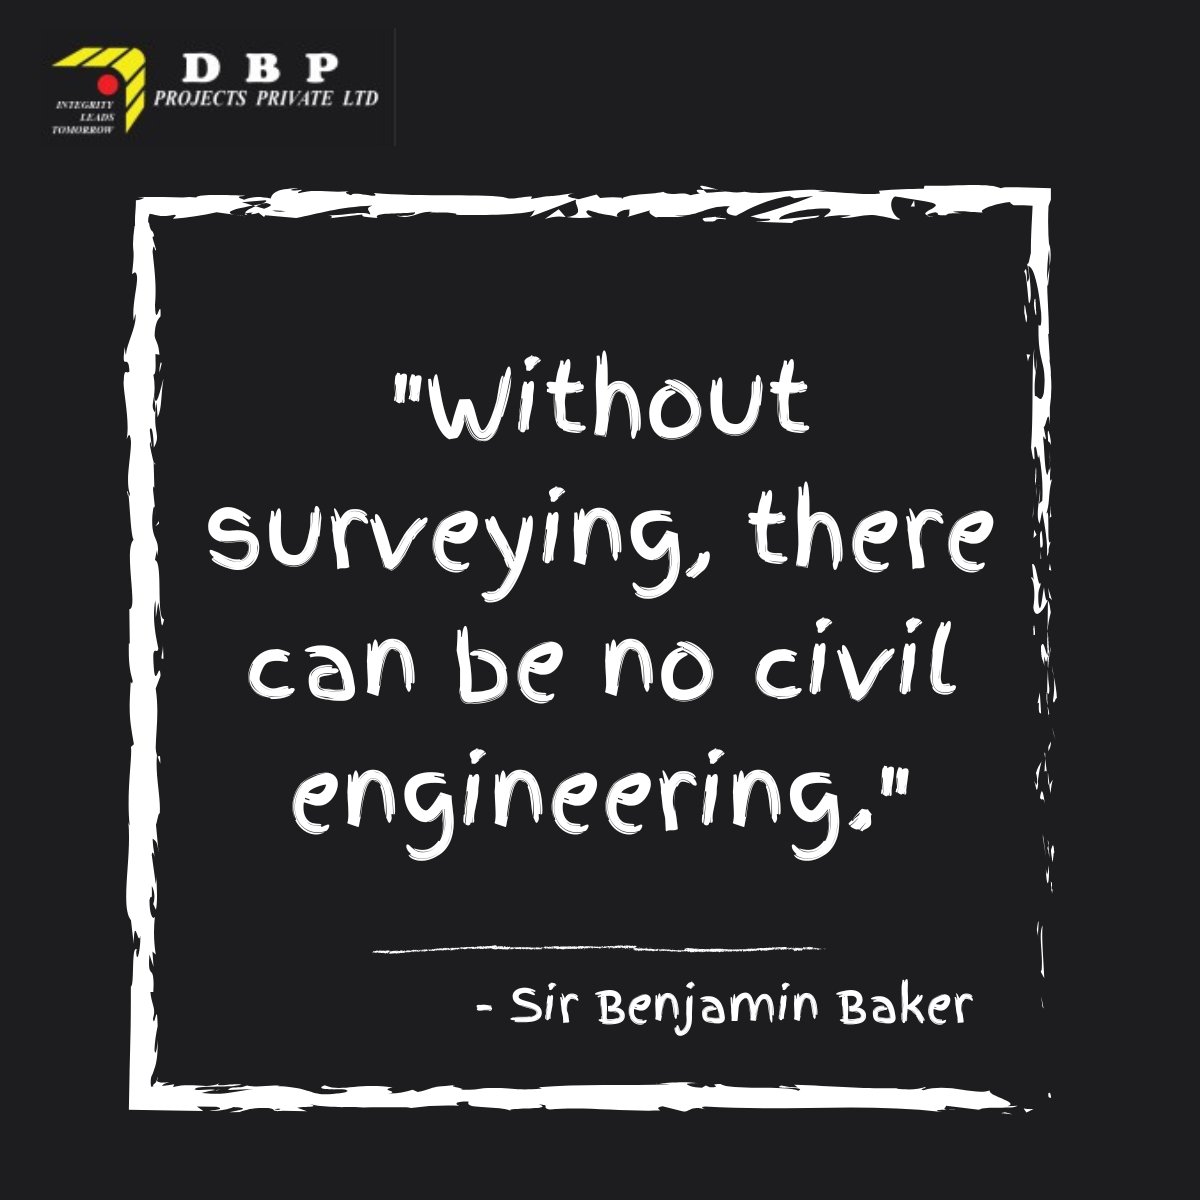 #DBP #waterinfrastructure #gis #autocad #mapping #surveying #dataanalytics #dronesurvey #geospatial #autocaddrawing #RevolutionizingWaterProjects